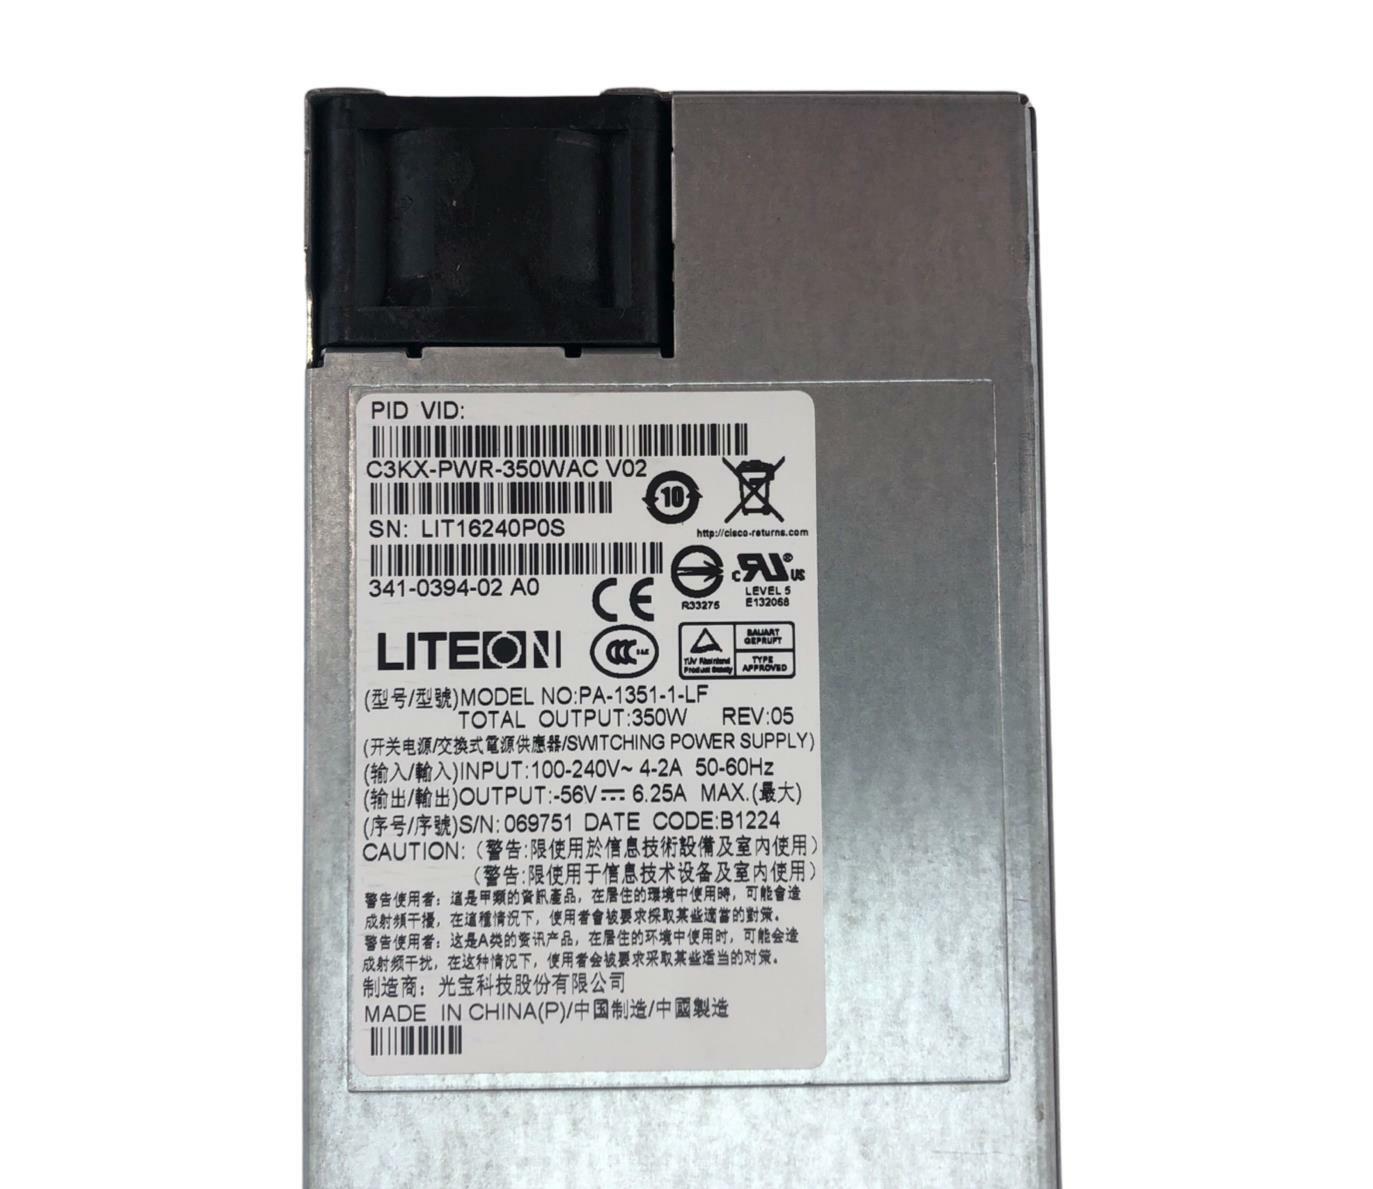 LiteOn PA-1351-1-LF 350W Switching Power Supply C3KX-PWR-350WAC